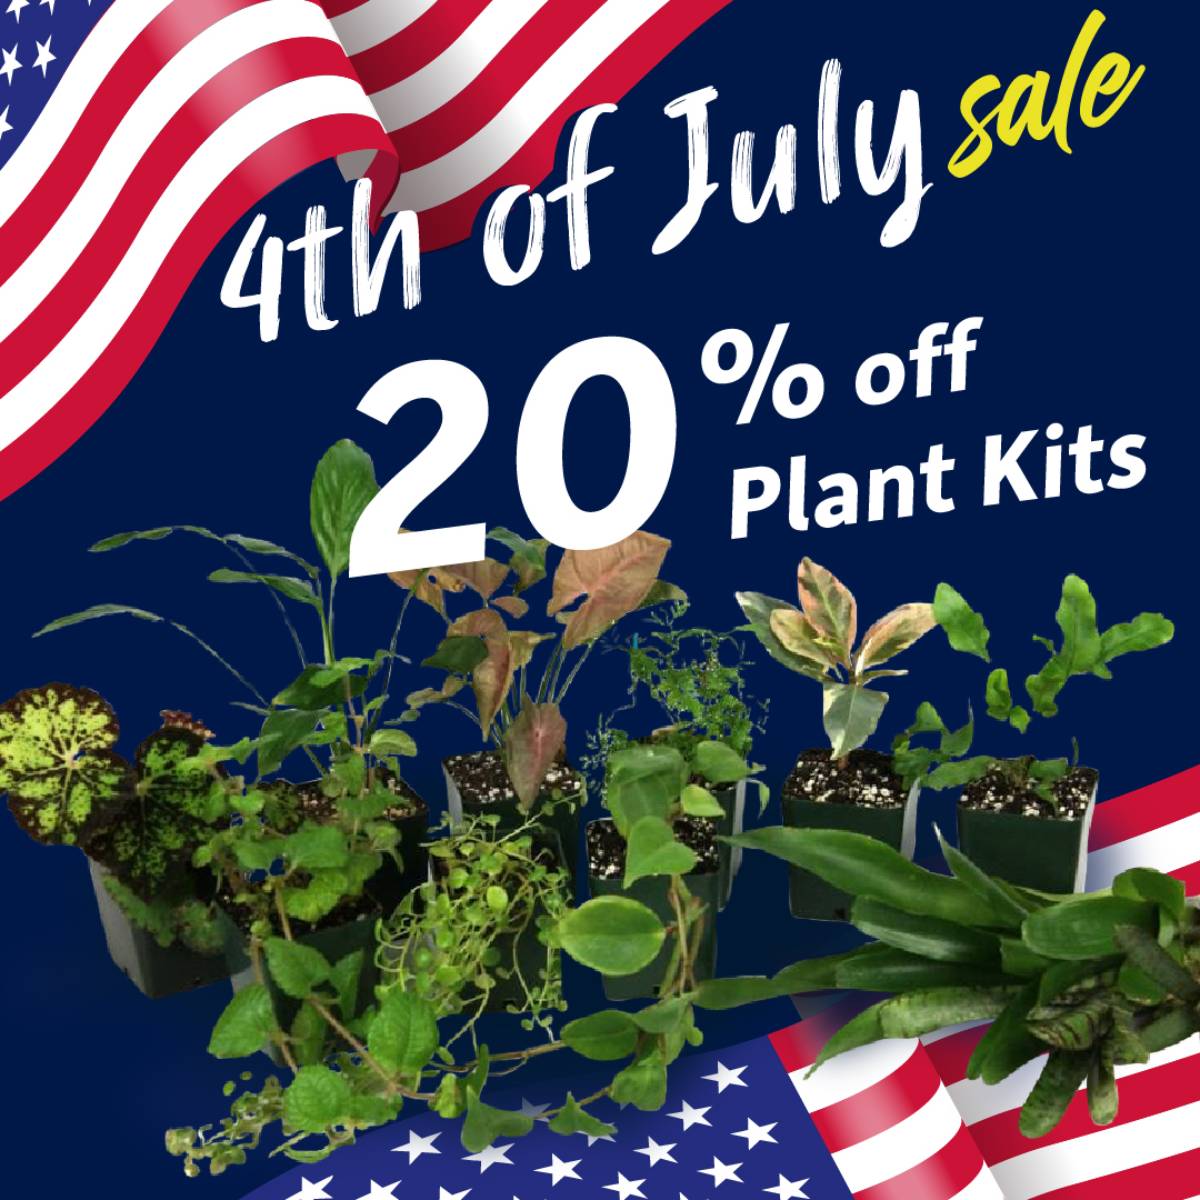 Save 20% on plant kits.